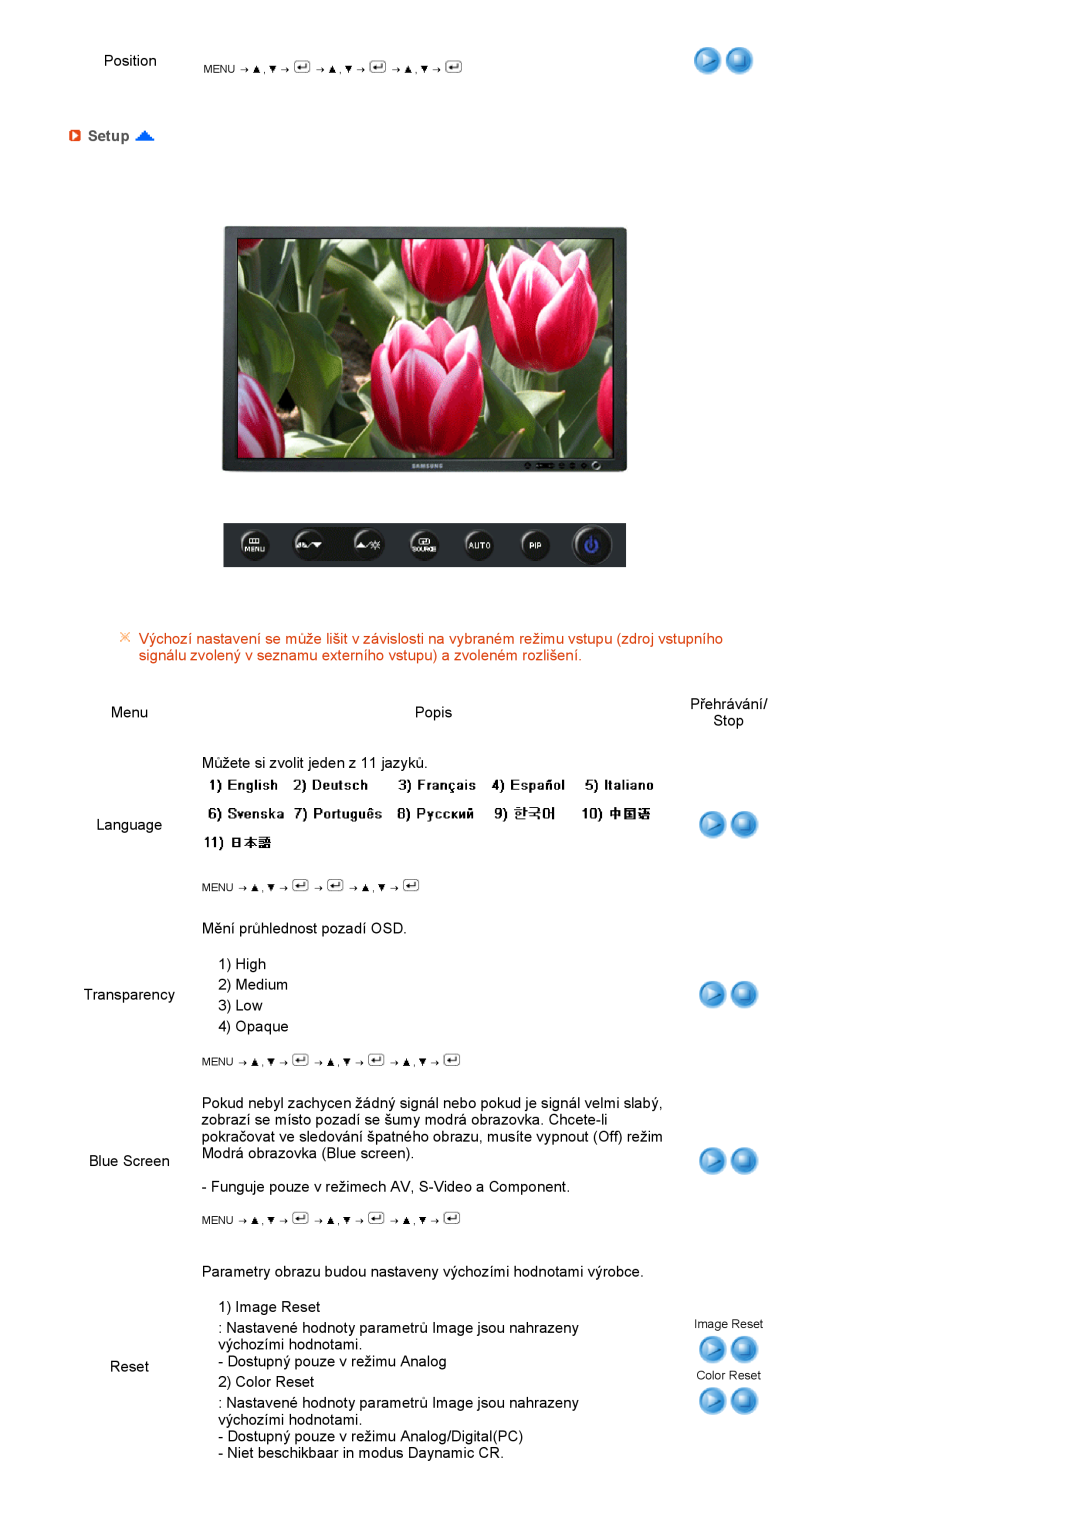 Samsung LS27HUBCBS/EDC, LS27HUBCB/EDC manual Setup, Image Reset Color Reset 